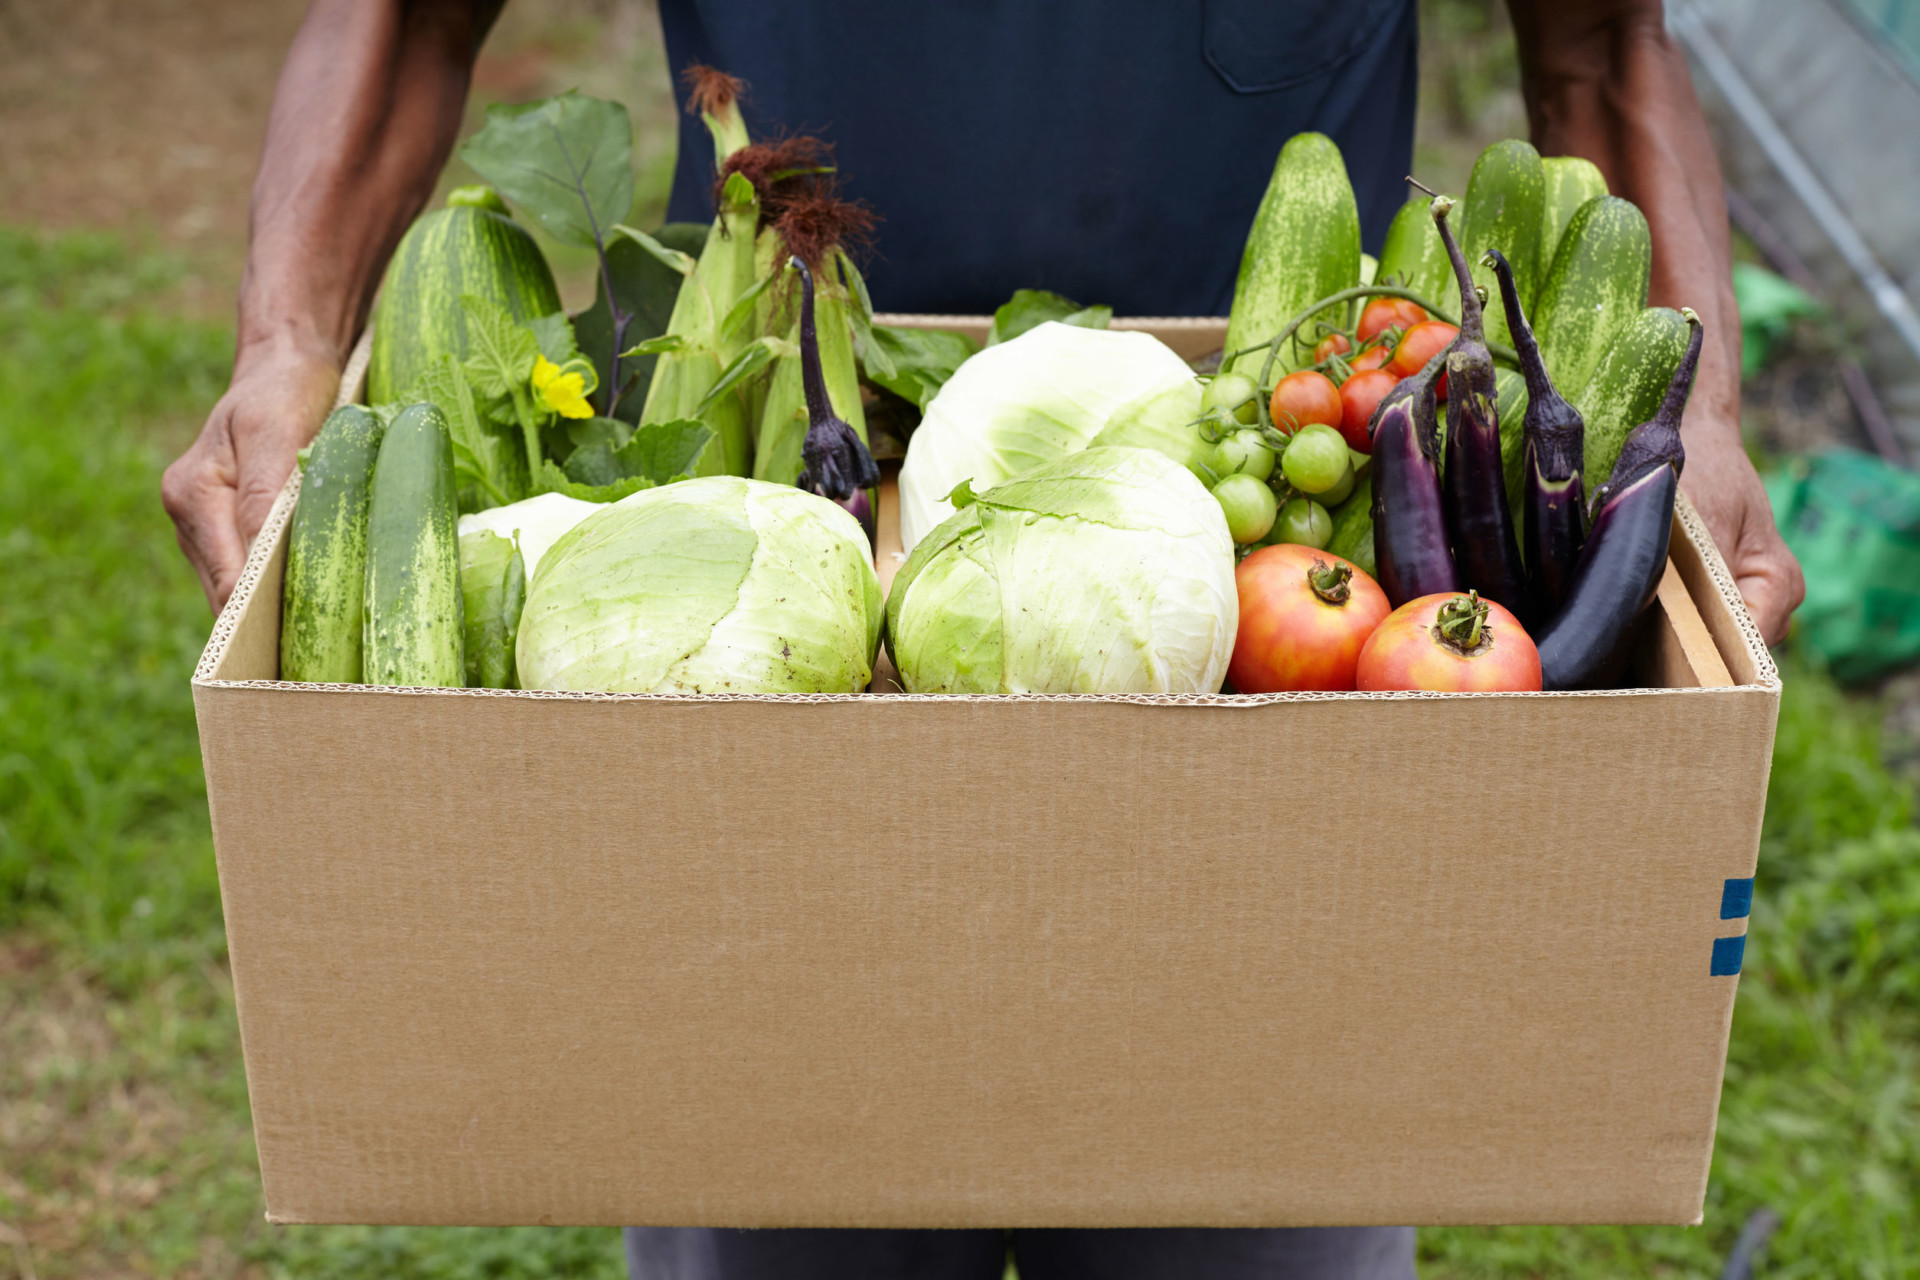 box filled fresh vegetables - community food drive